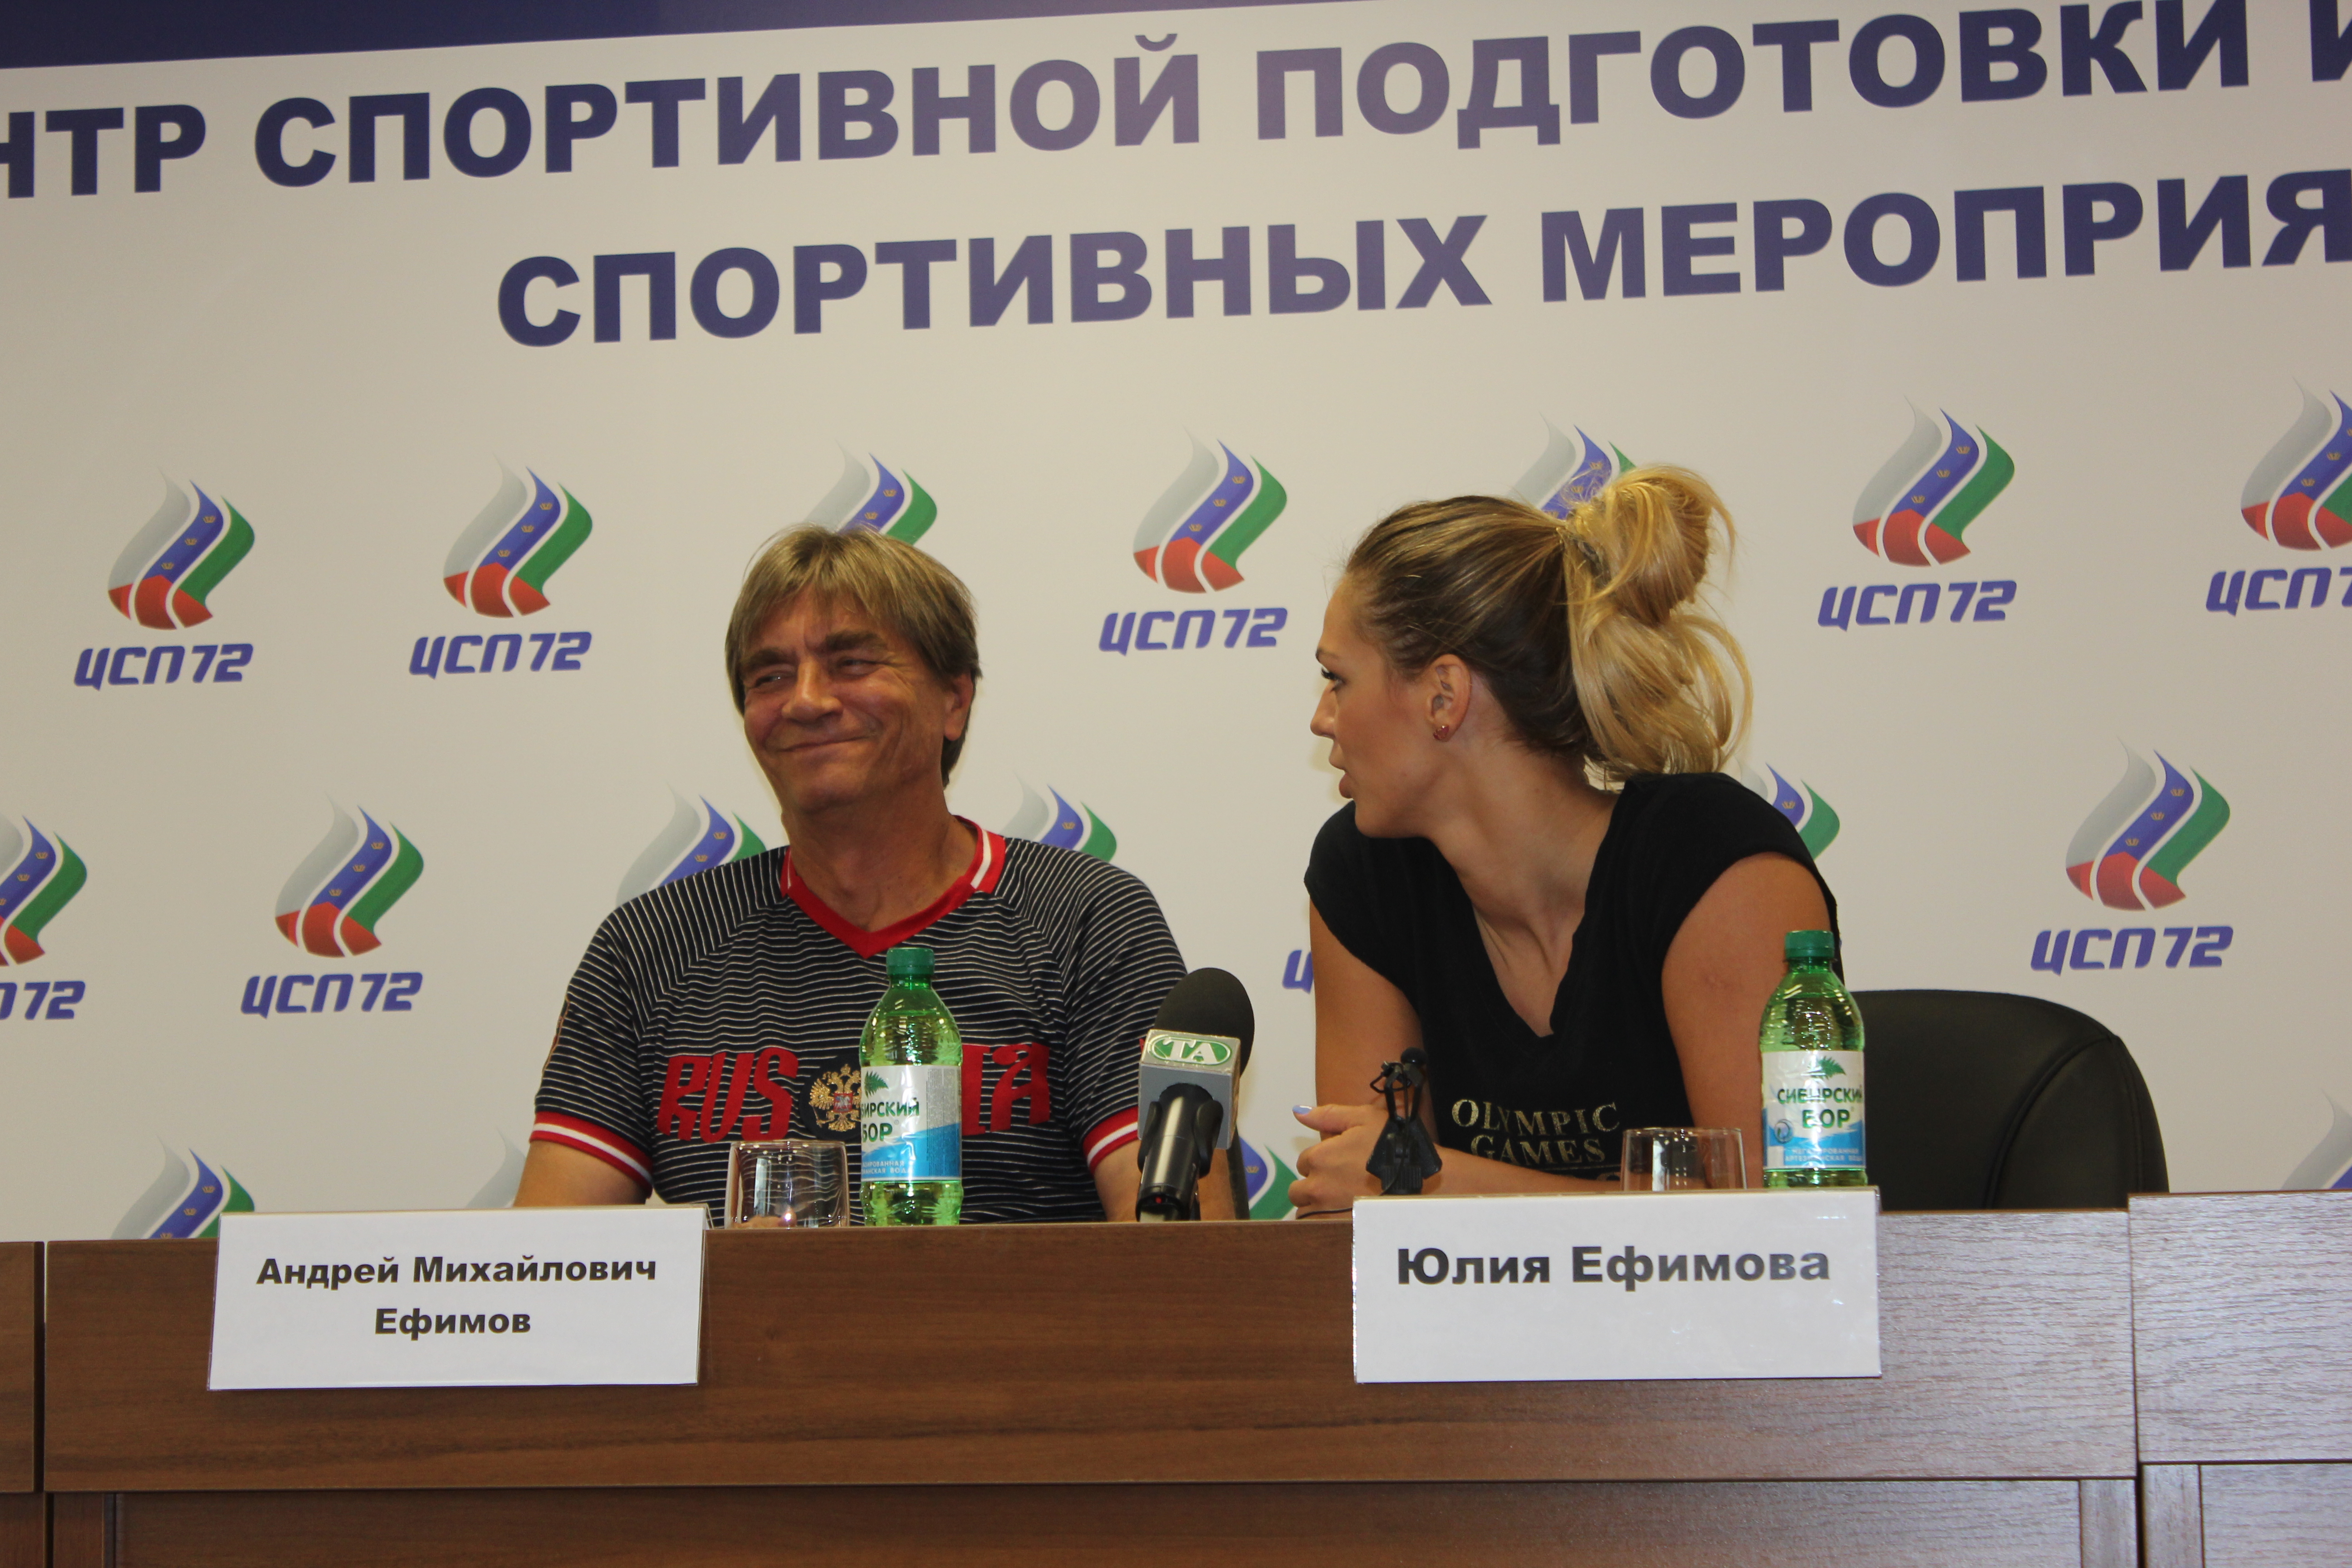 Юлия Ефимова провела пресс-конференцию в Тюмени - 18 августа 2015 года